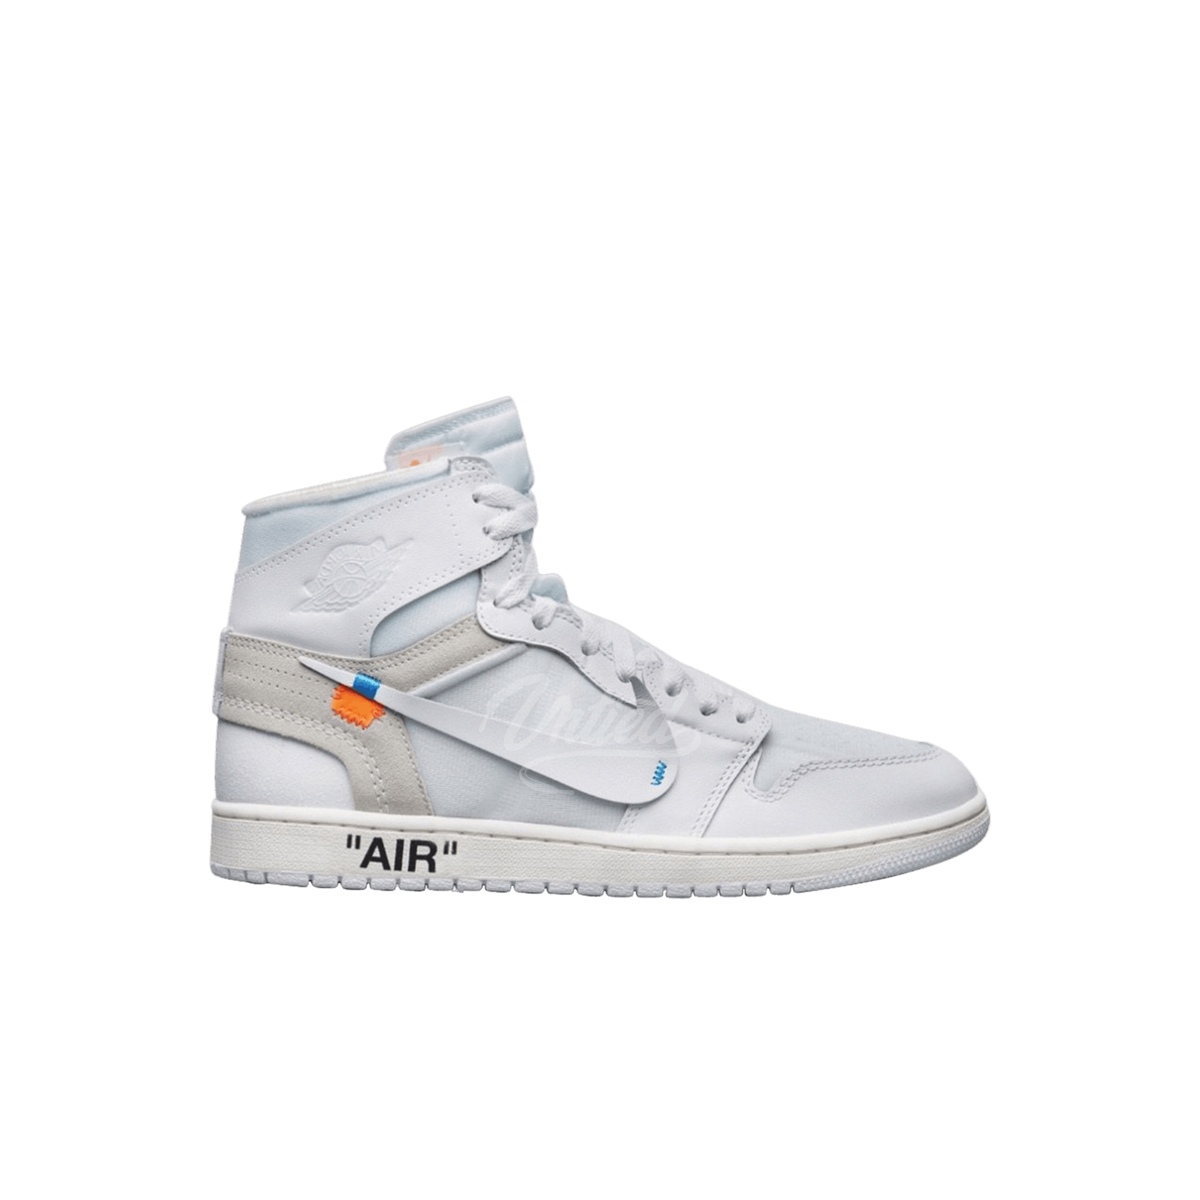 Nike x Off-White Air Jordan 1 Sneakers Sell for 16,120 Euros